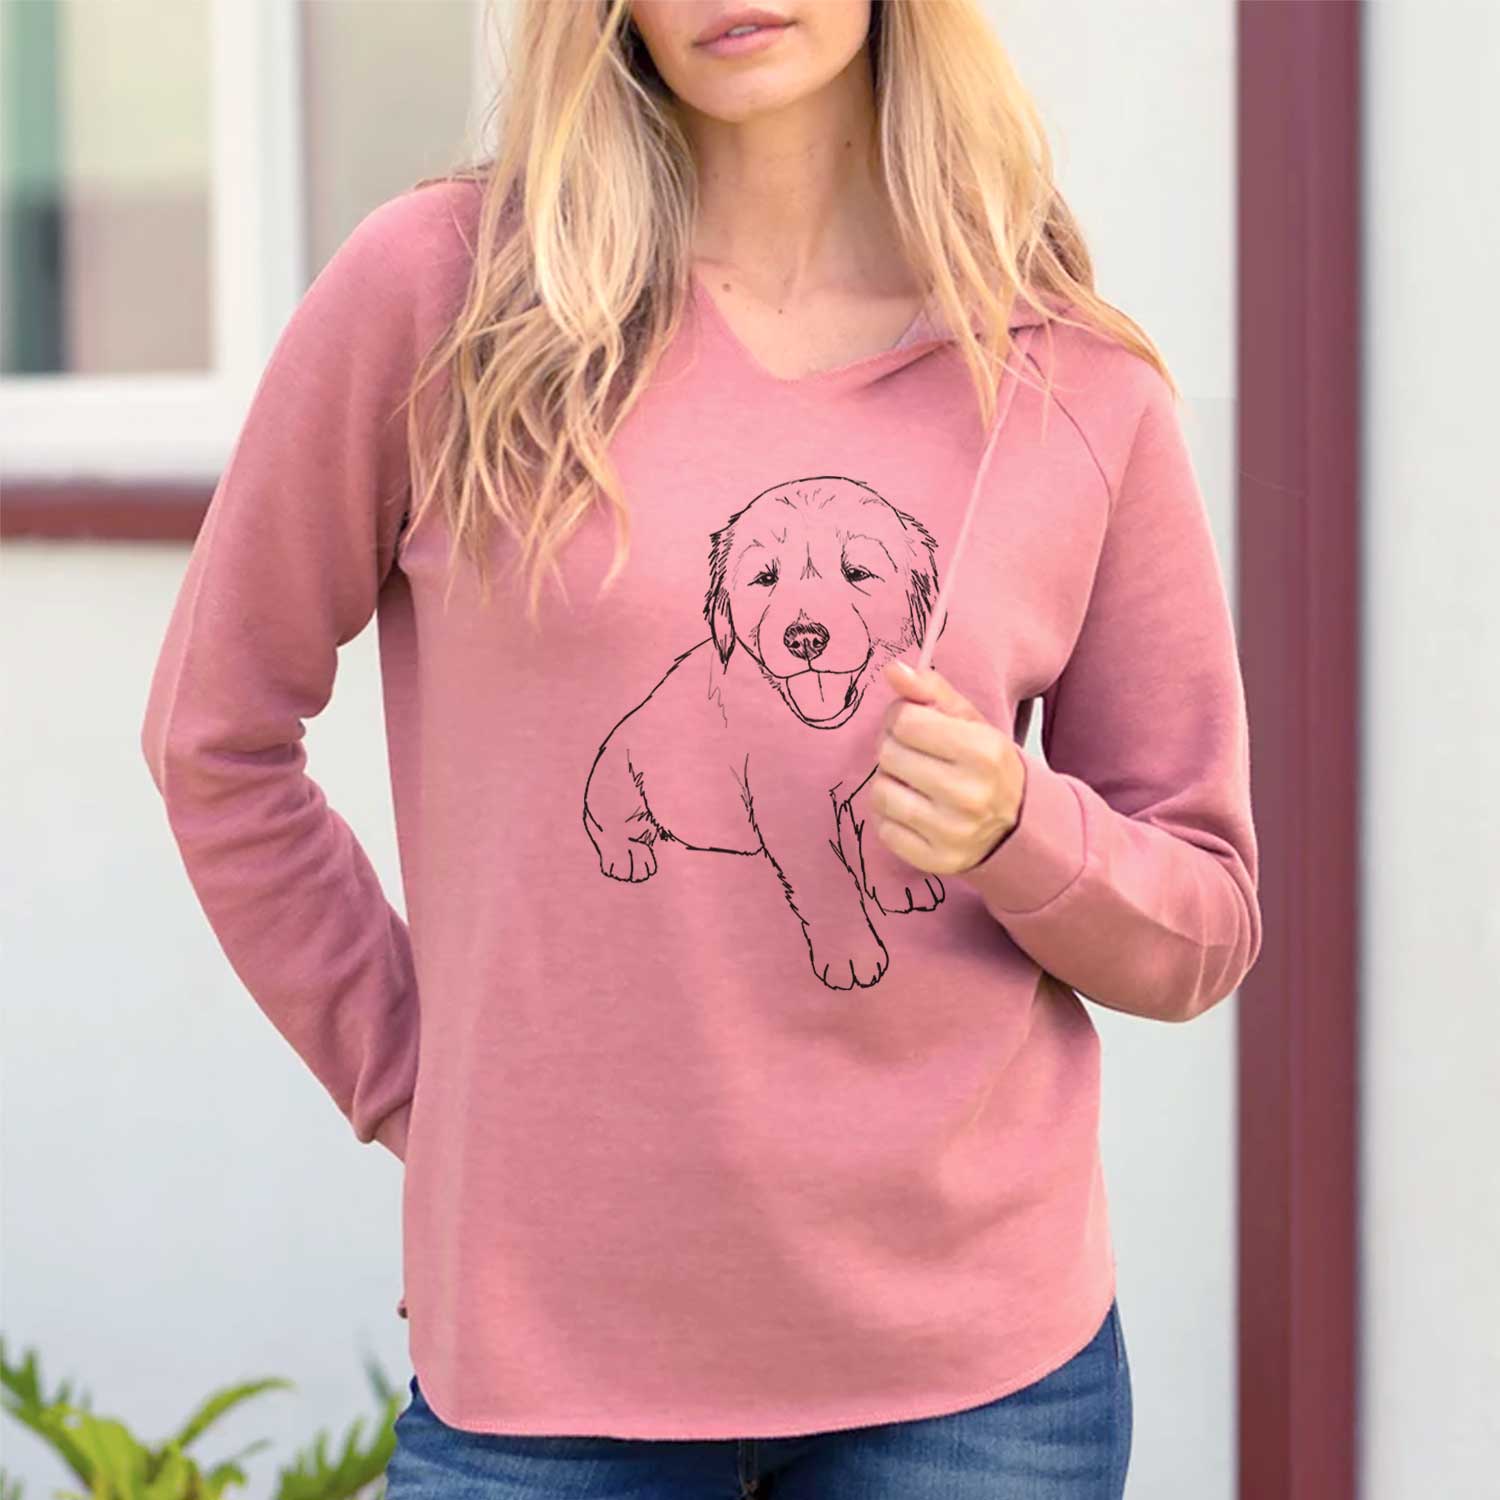 Doodled Loganator the Golden Retriever Puppy - Cali Wave Hooded Sweatshirt